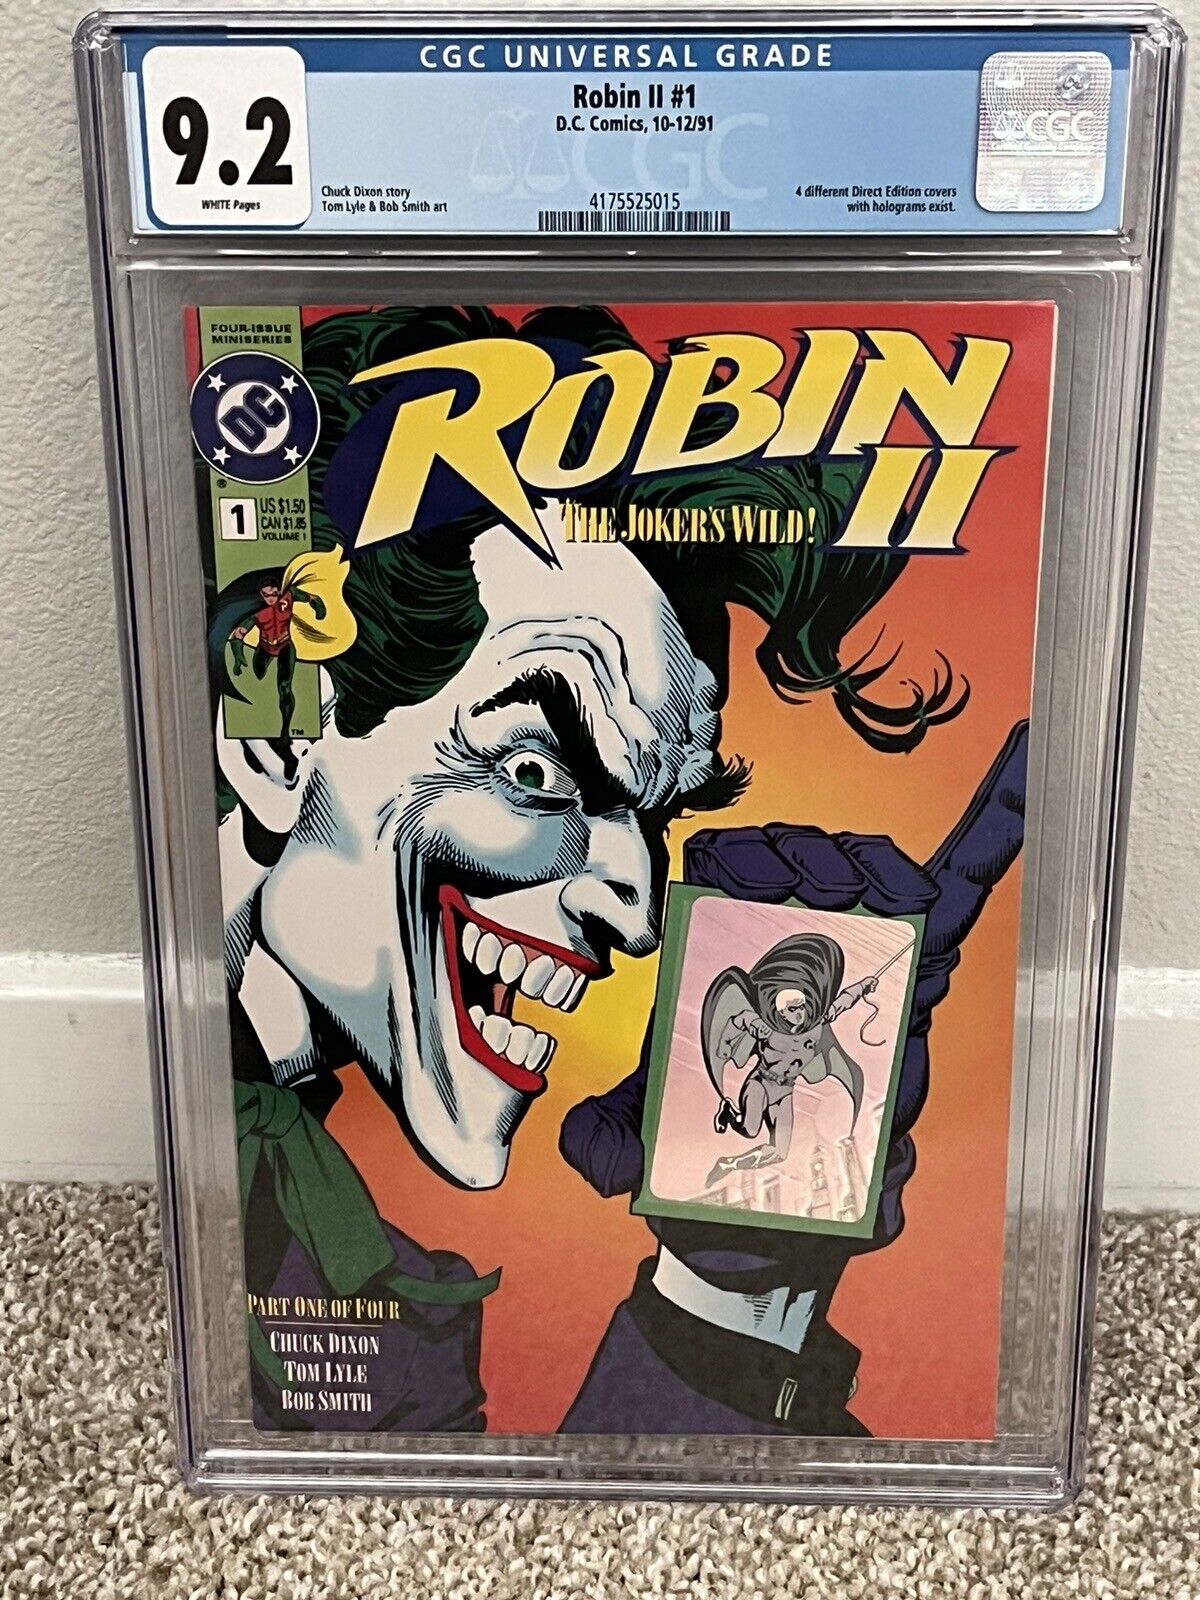 Robin II #1 CGC 9.2 (1991) - The Jokers Wild